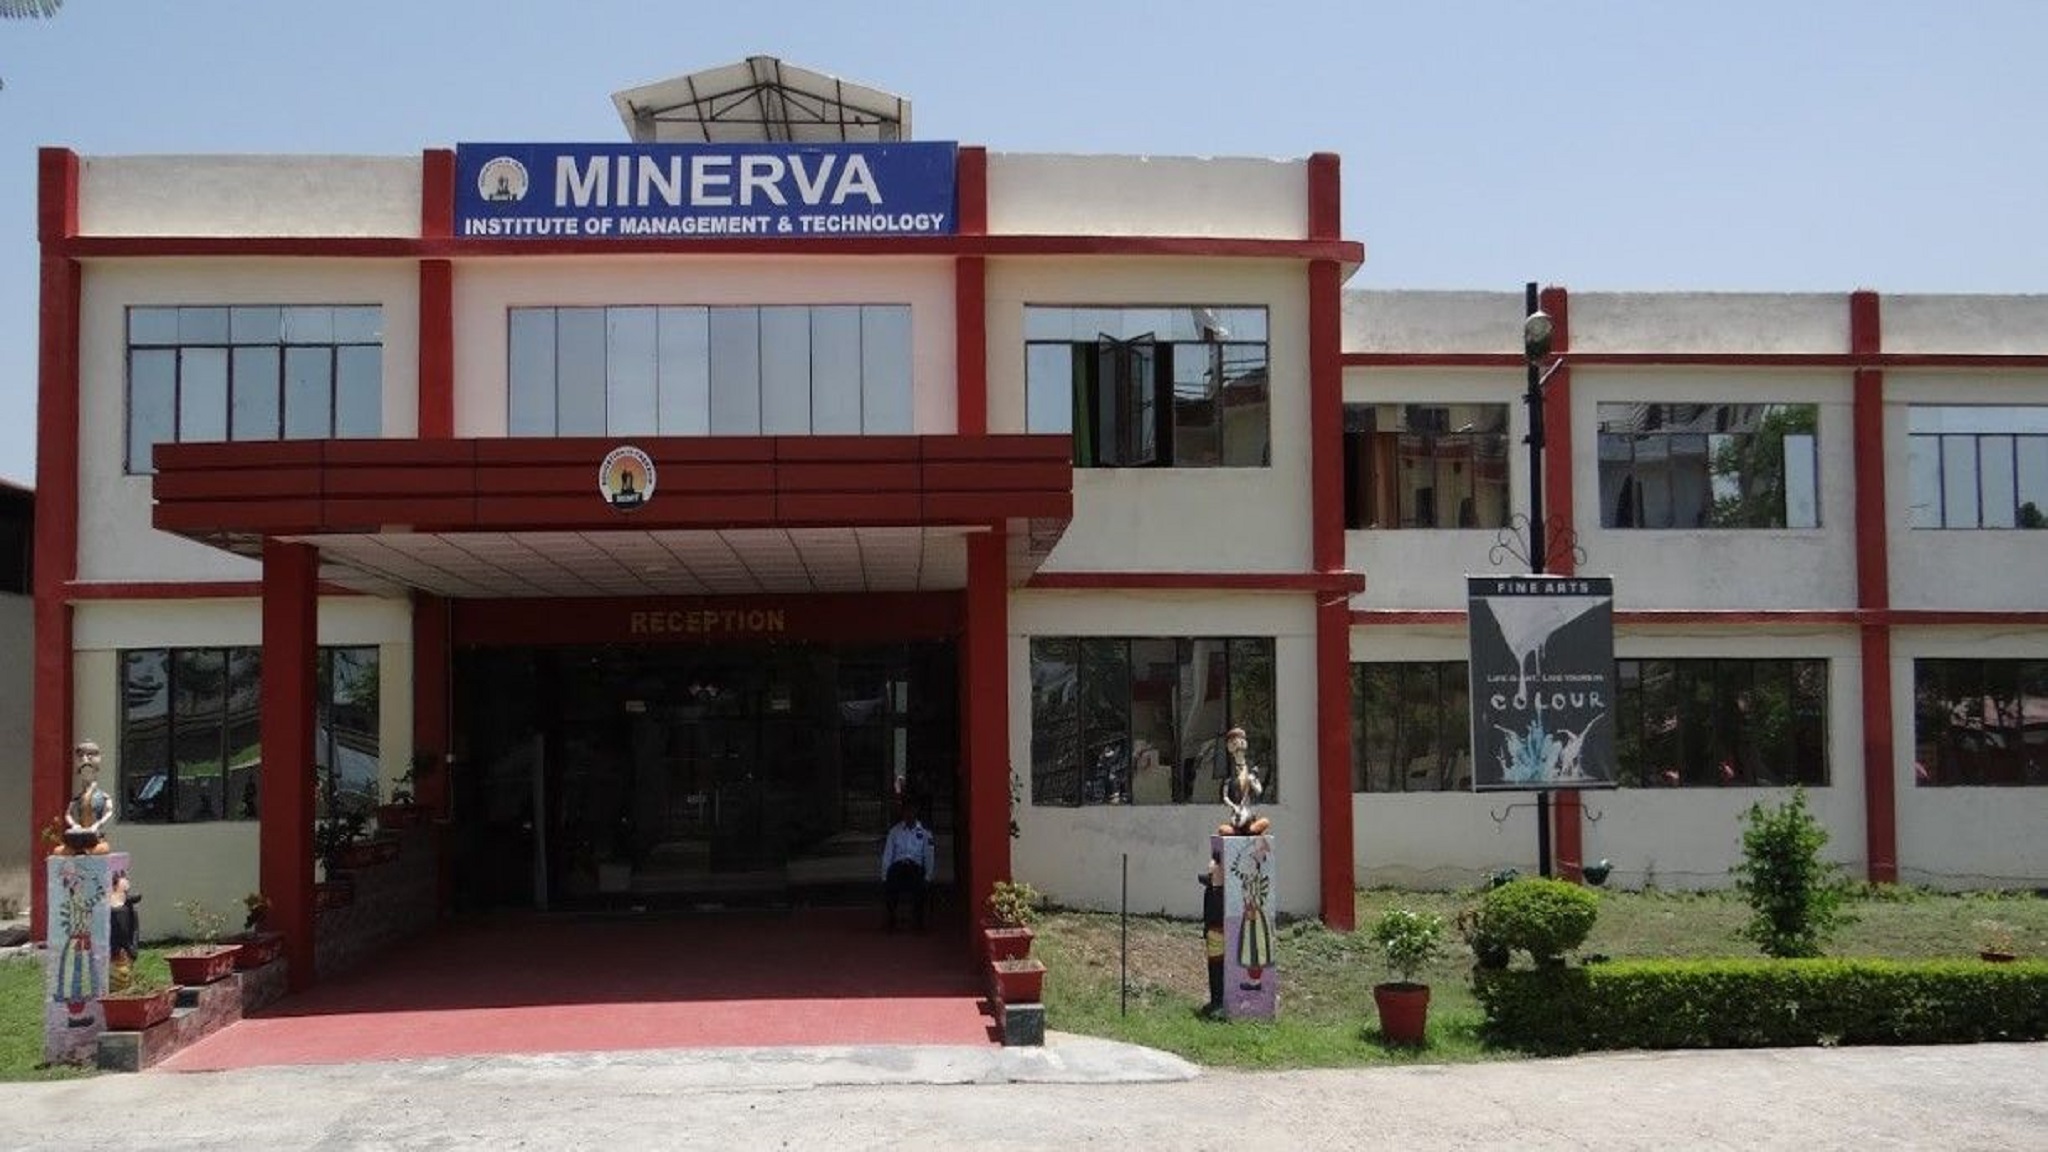 Minerva Institute of Management & Technology - Full Details